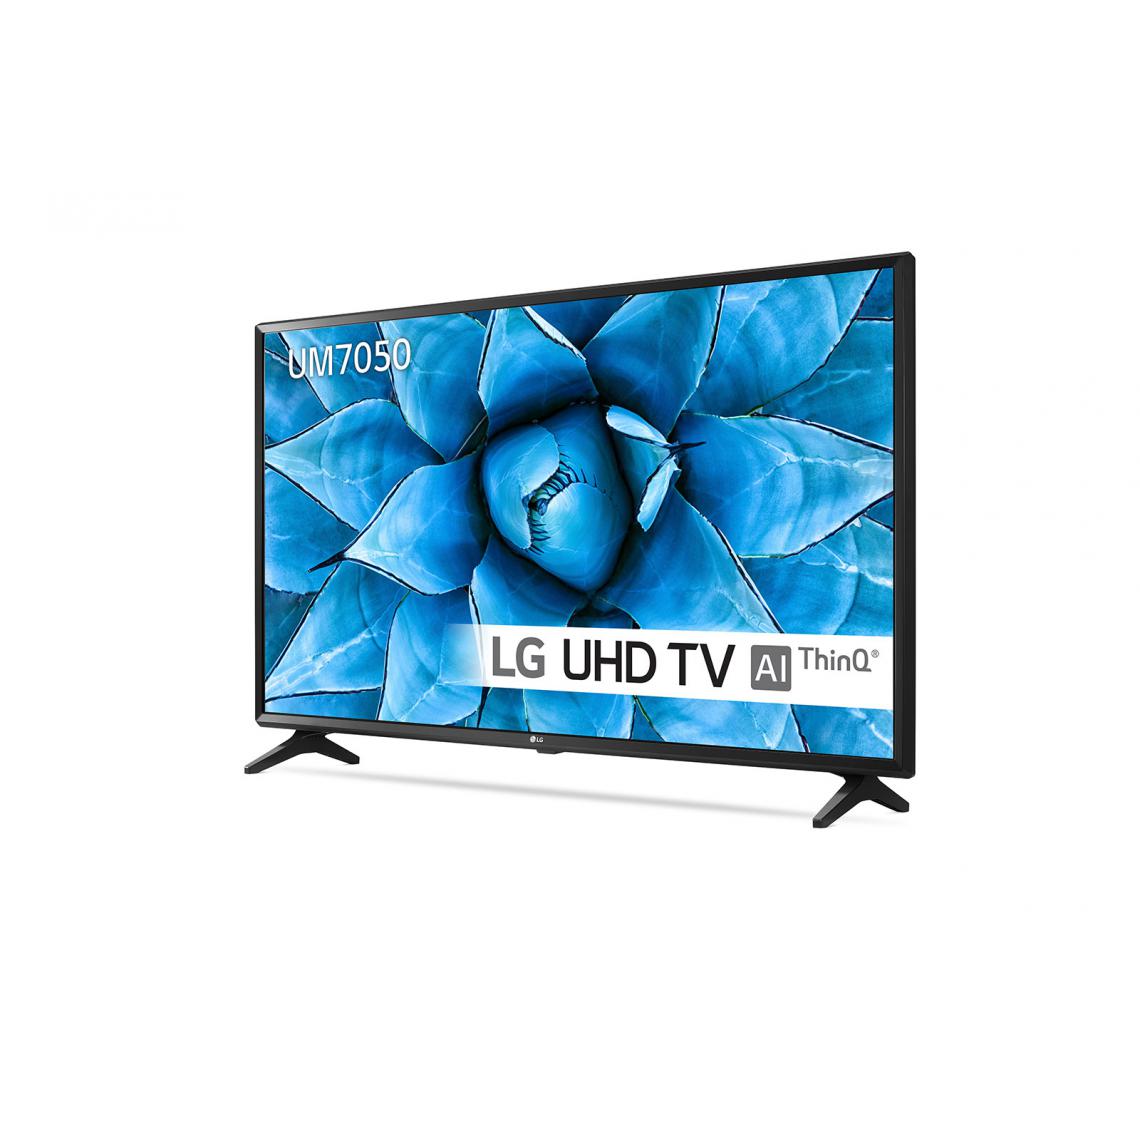 LG - LG 43UM7050 TV LED 4K UHD - 43 108cm - Ultra Surround - IPS 4K - Smart TV - 3xHDMI - 2xUSB - Classe energetique A - TV 50'' à 55''